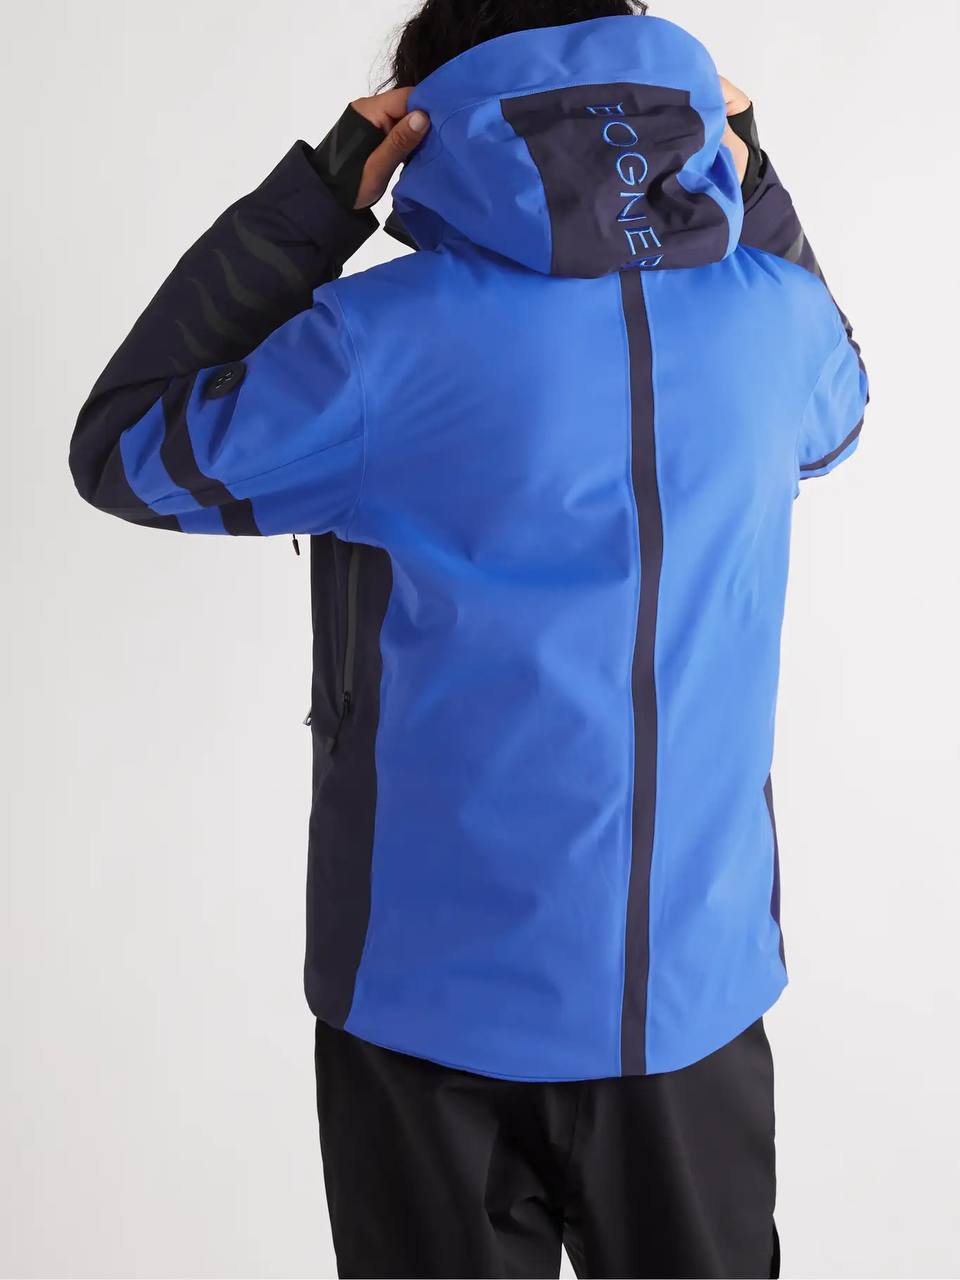 «Z» на куртке Меладзе оказалось просто частью дизайна куртки Bogner Freddy Ski Jacket